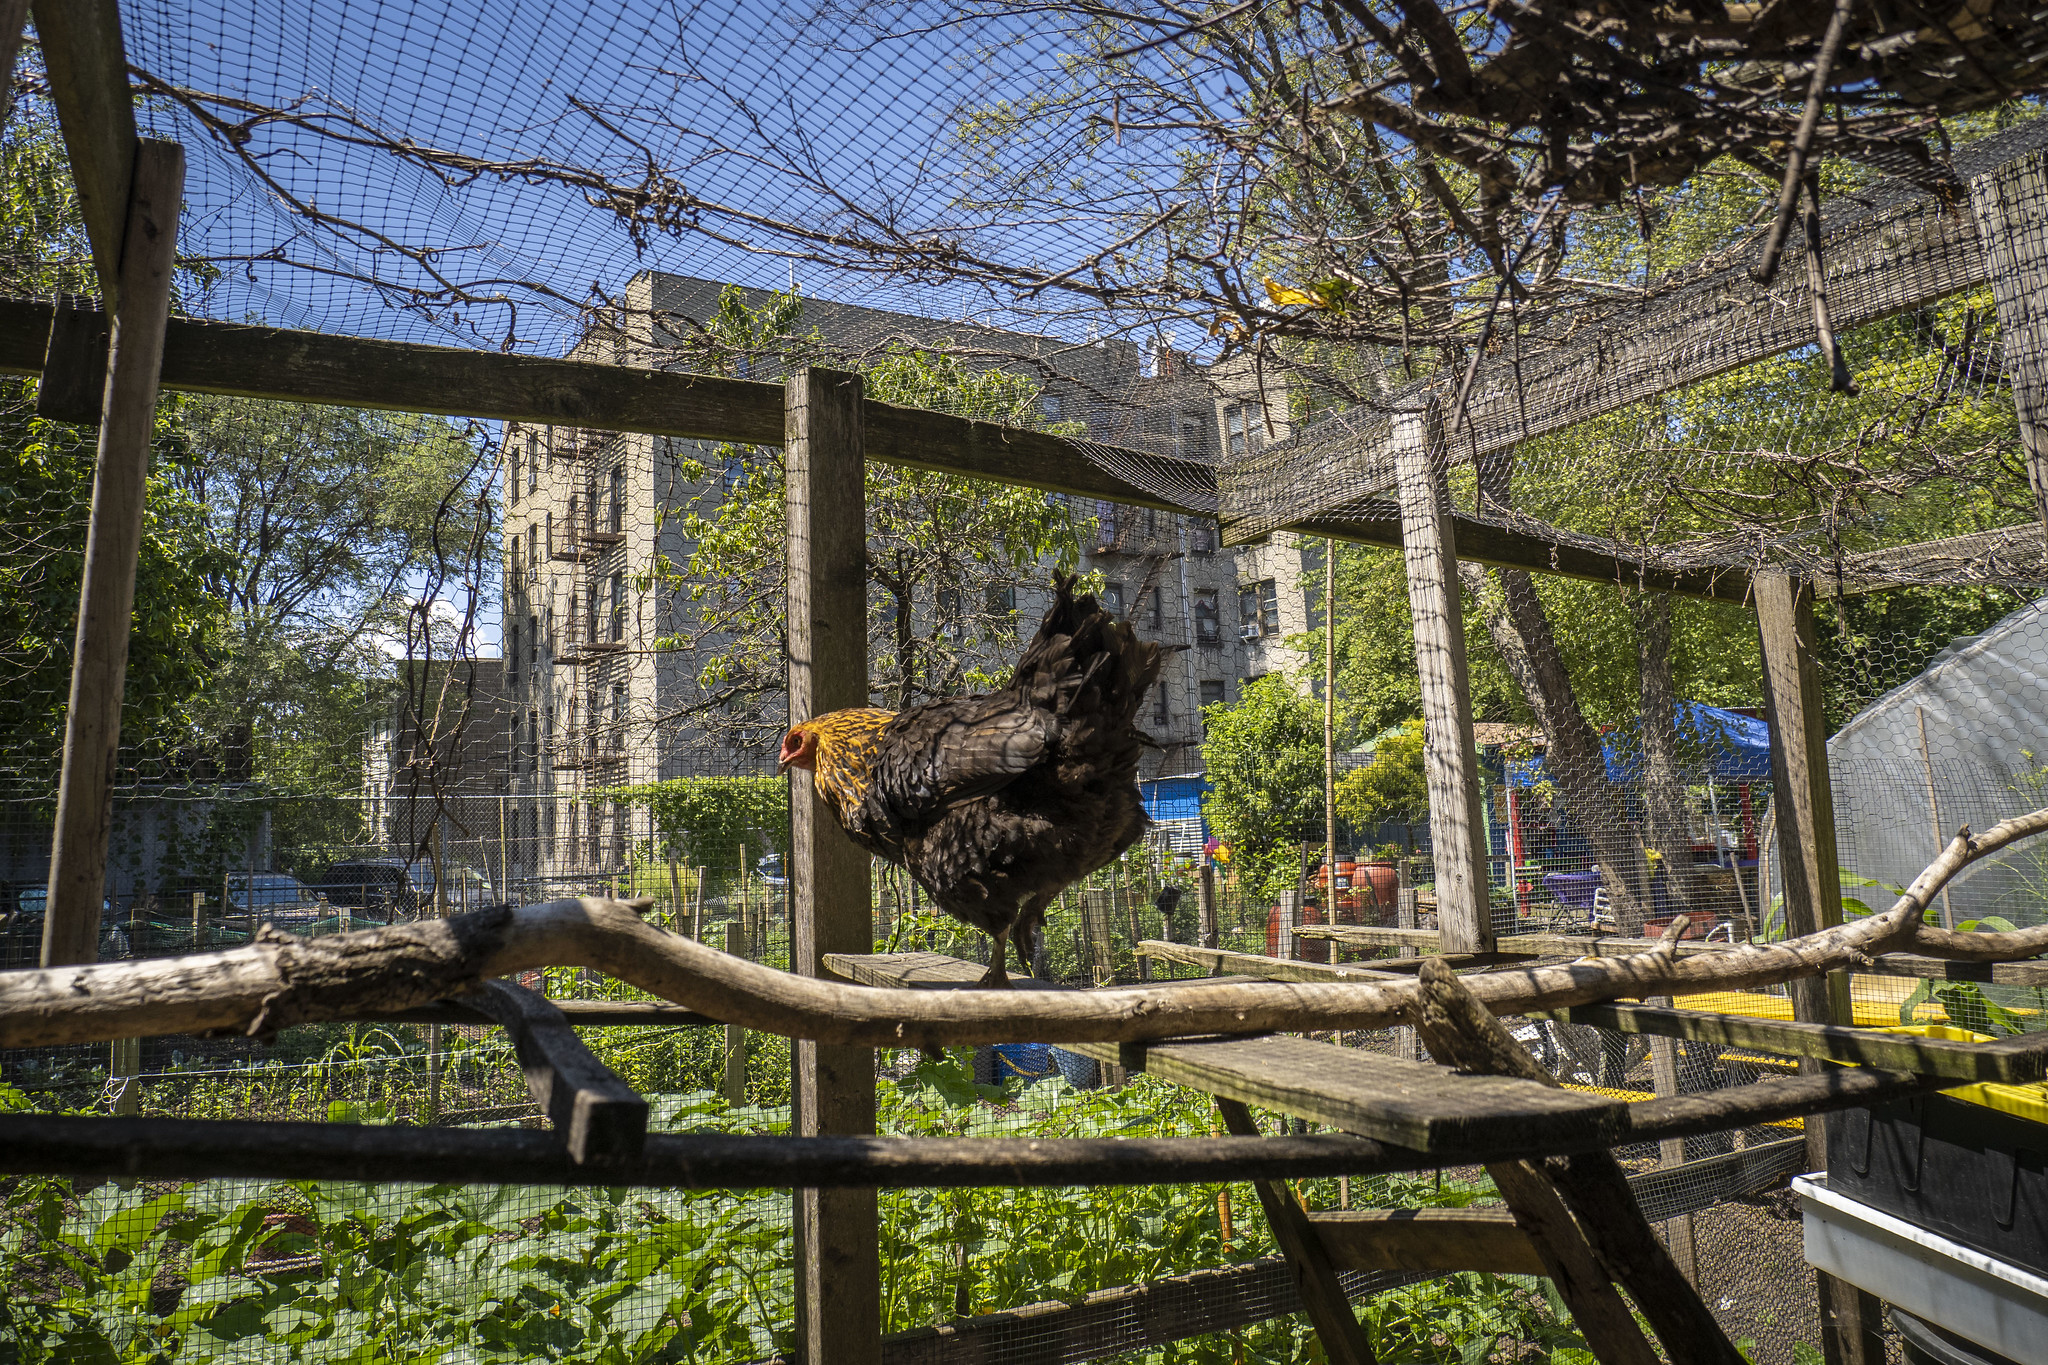 a hen stands on a branch in an enclosure inside of an urban garden